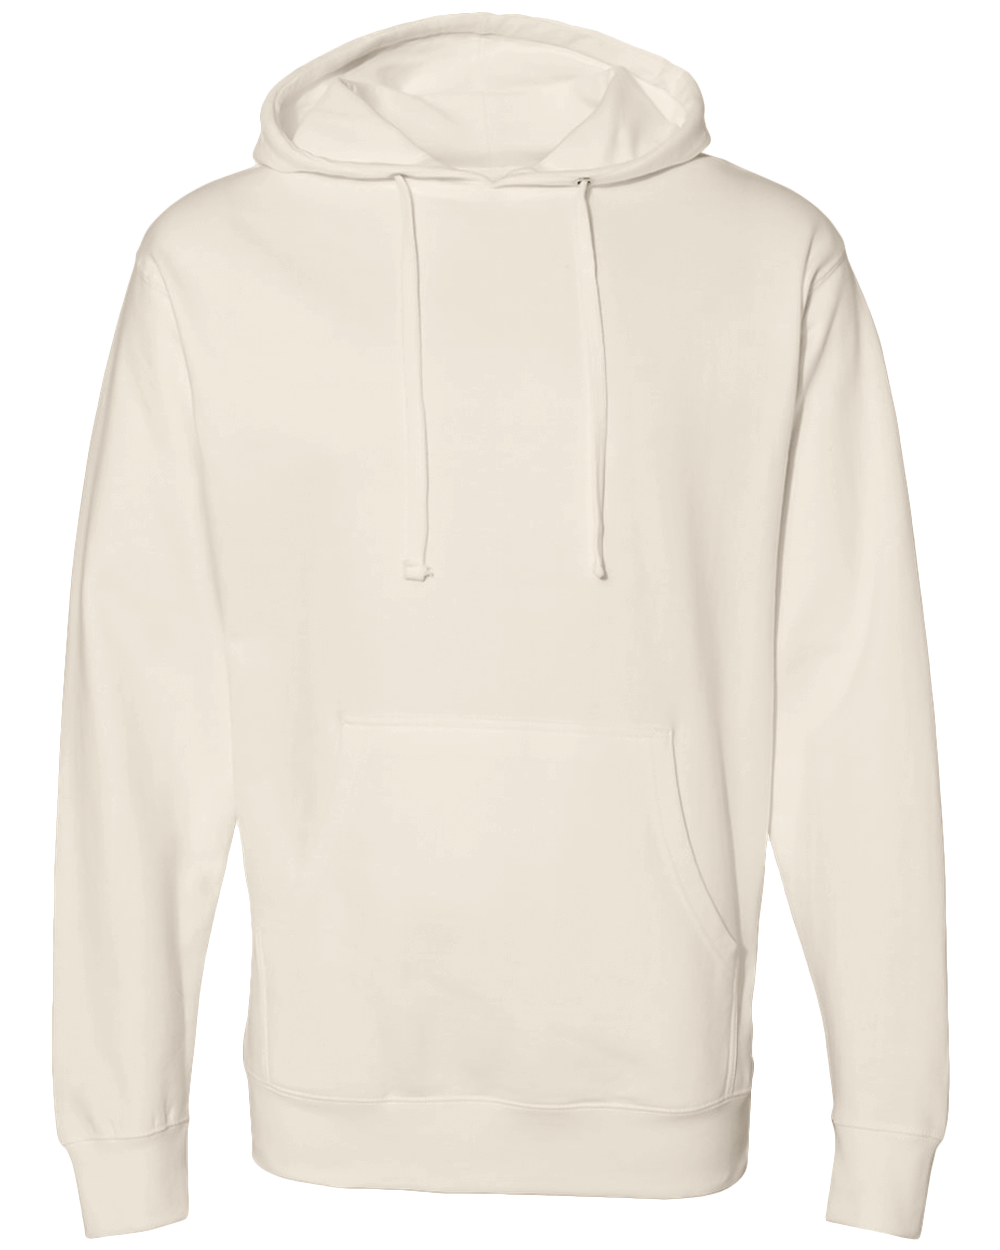 Fleece Printed Mens White Hooded Sweatshirt at Rs 300/piece in